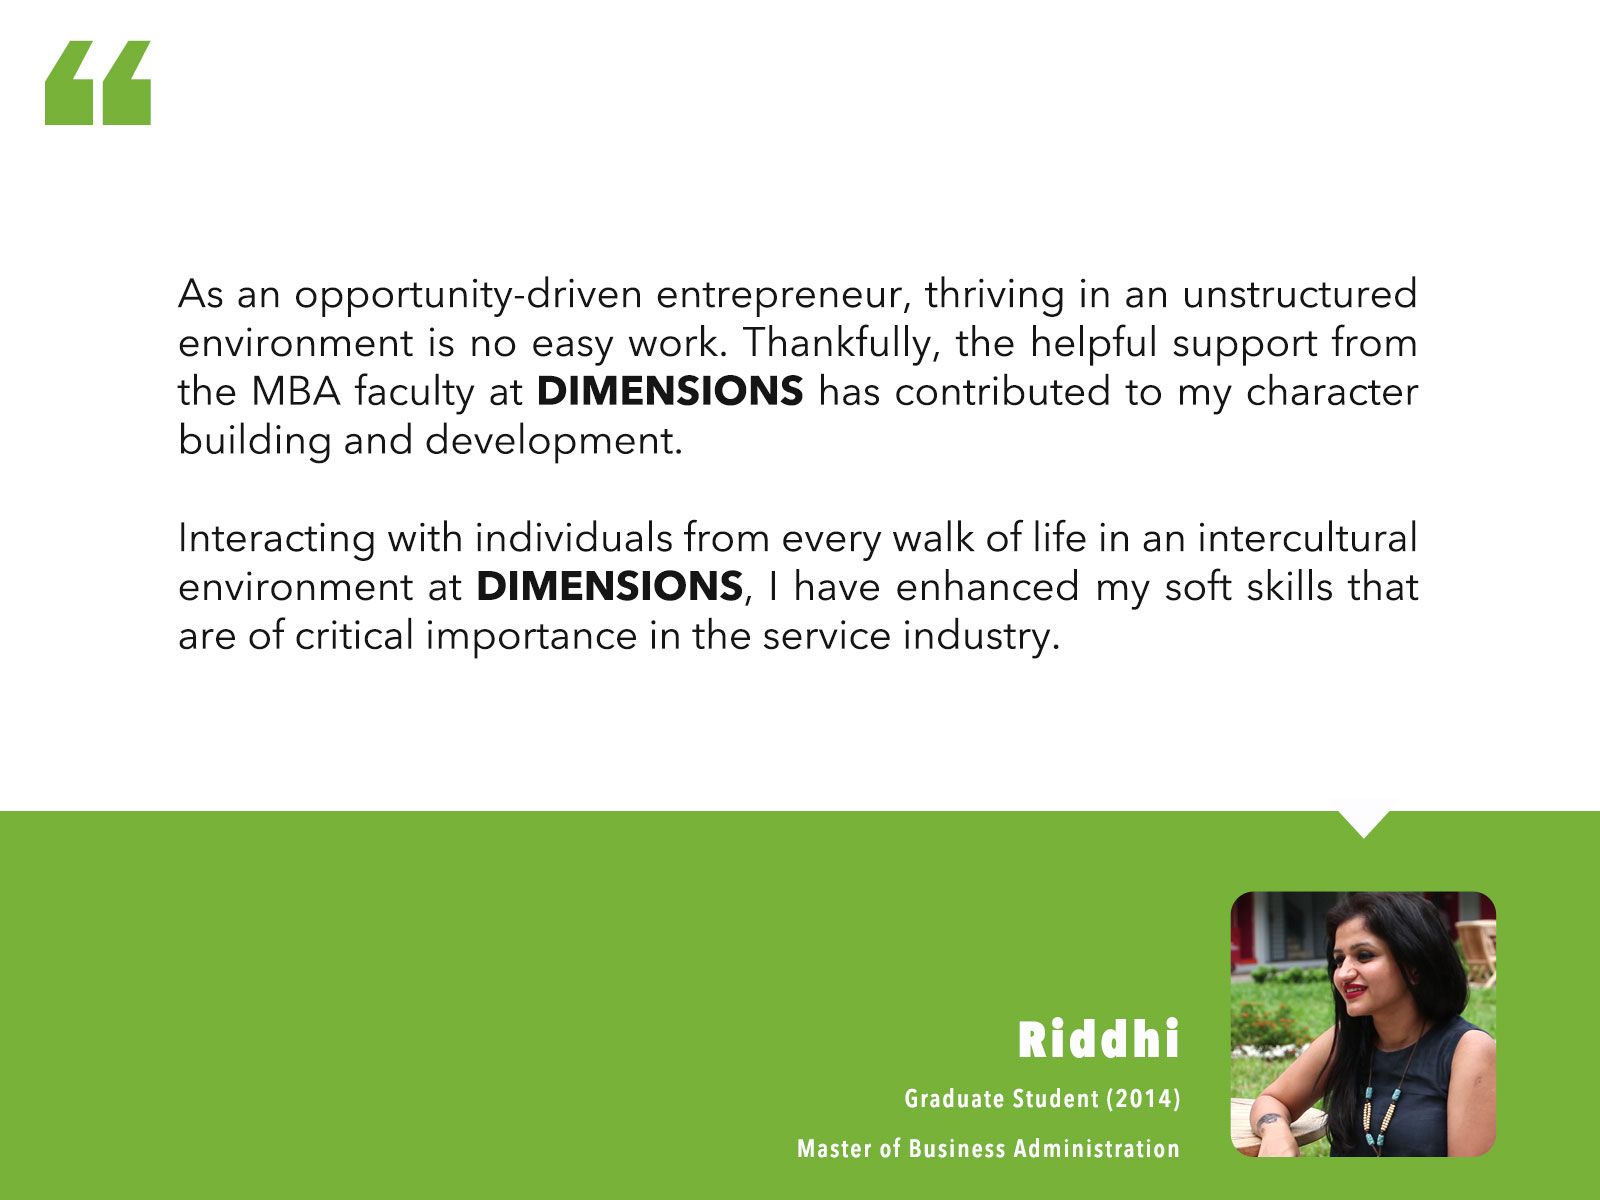 riddhi - MBA graduated student